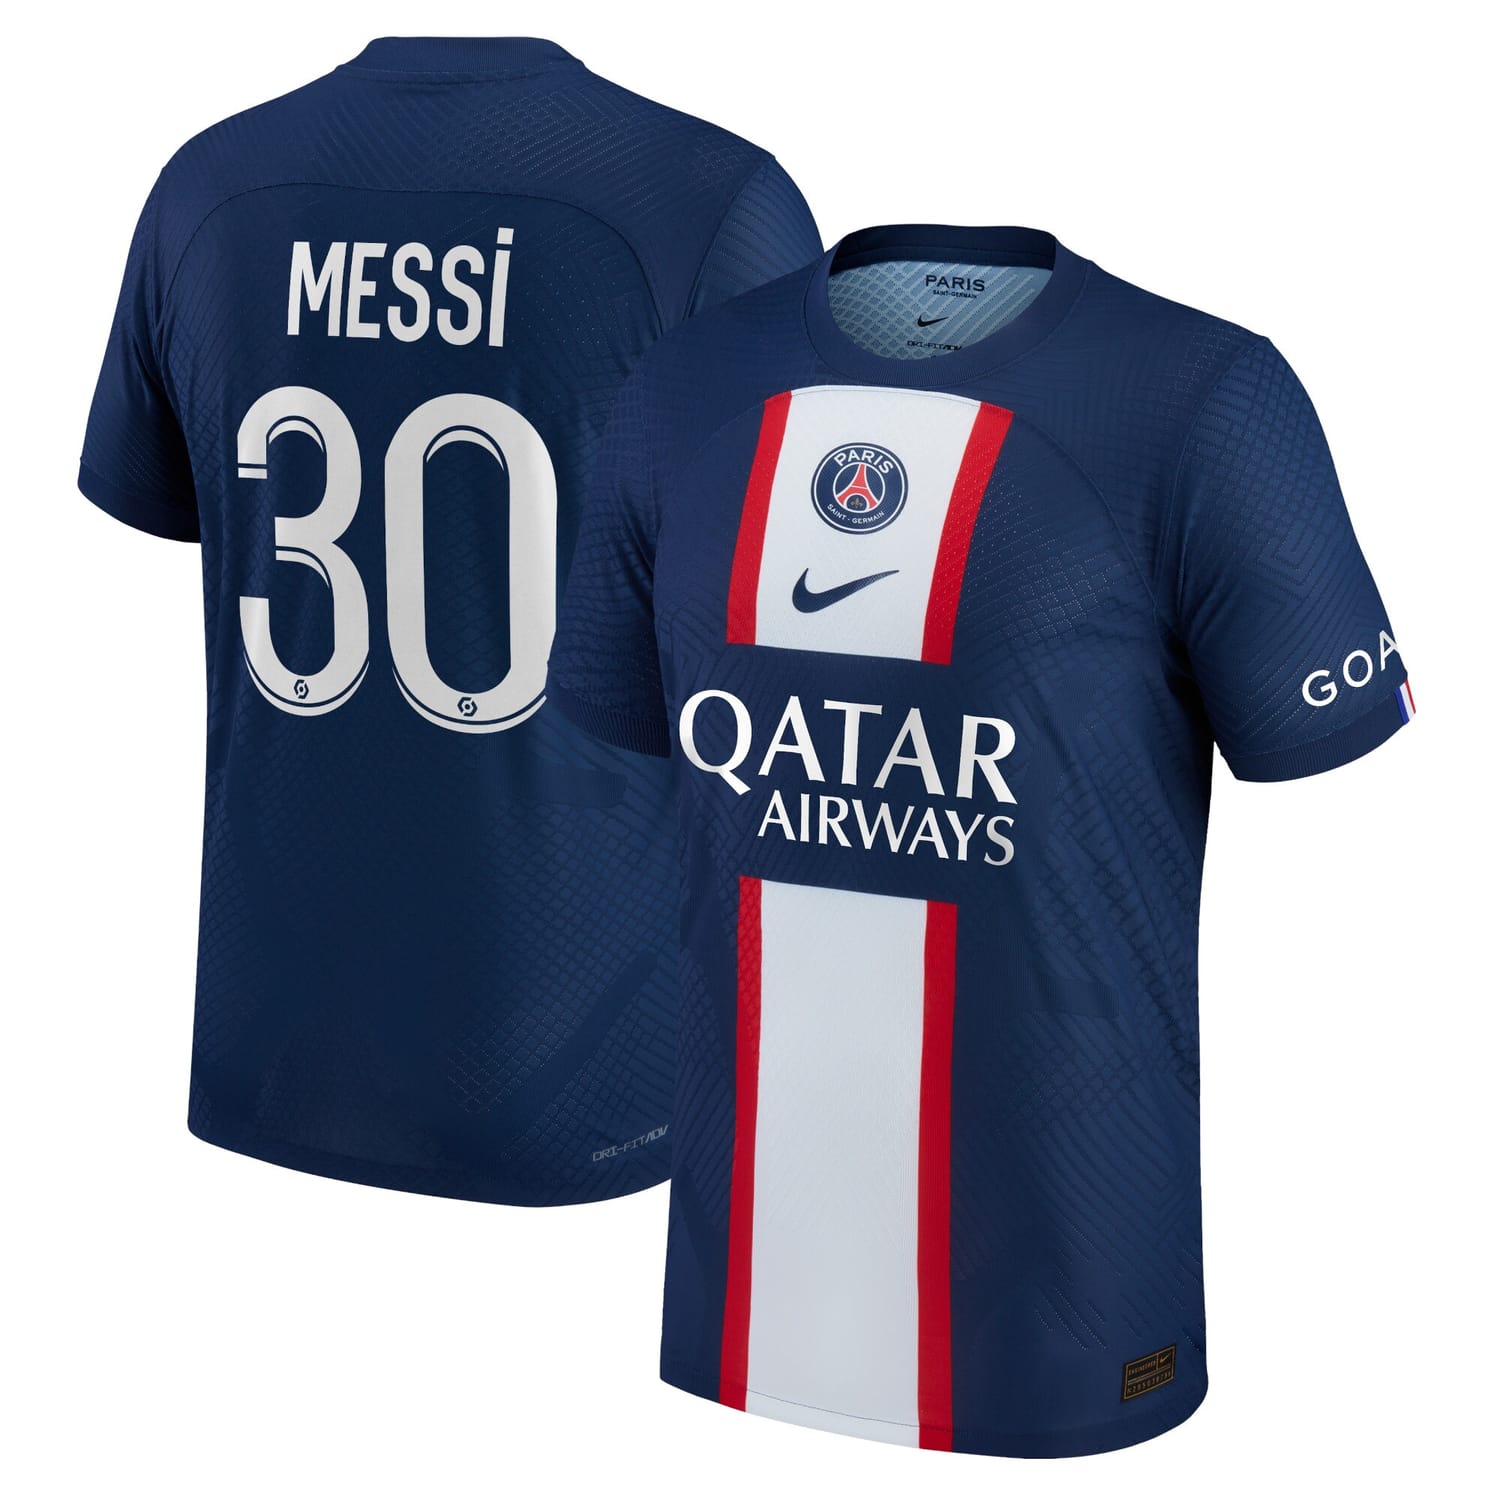 Ligue 1 Paris Saint-Germain Home Authentic Jersey Shirt 2022-23 player Lionel Messi 30 printing for Men